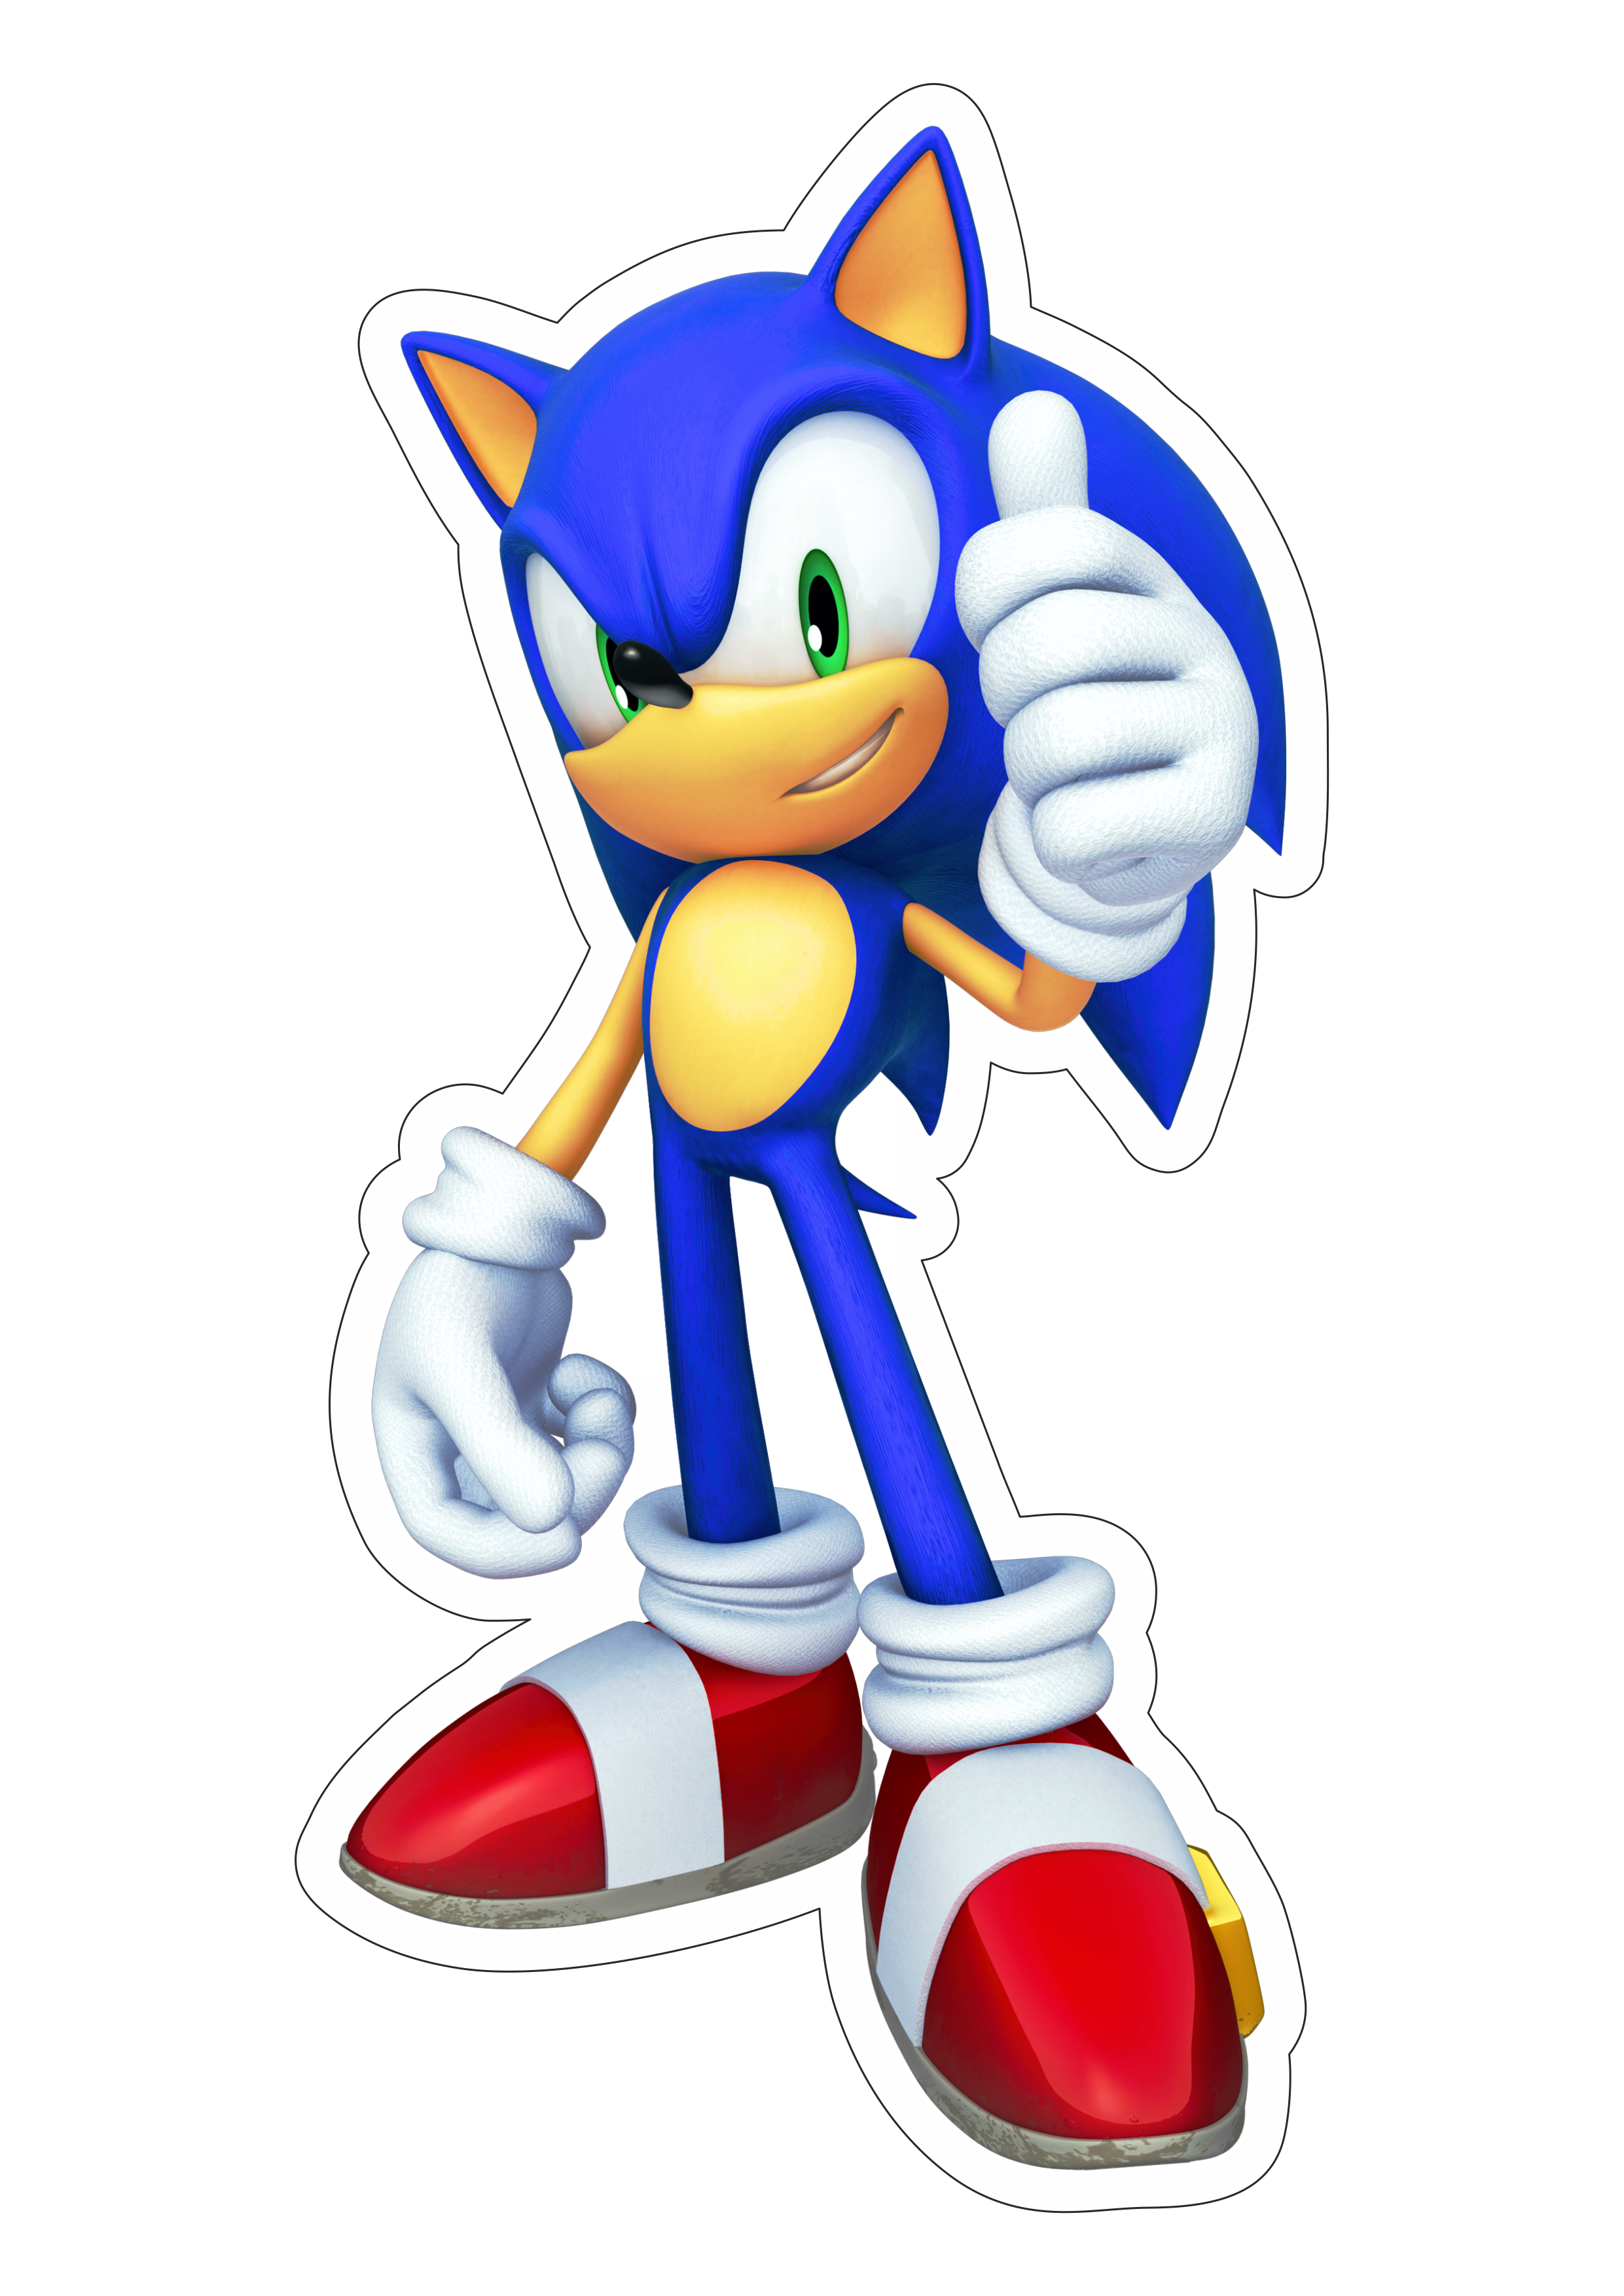 Sonic correndo Png - Baixar Imagens em PNG